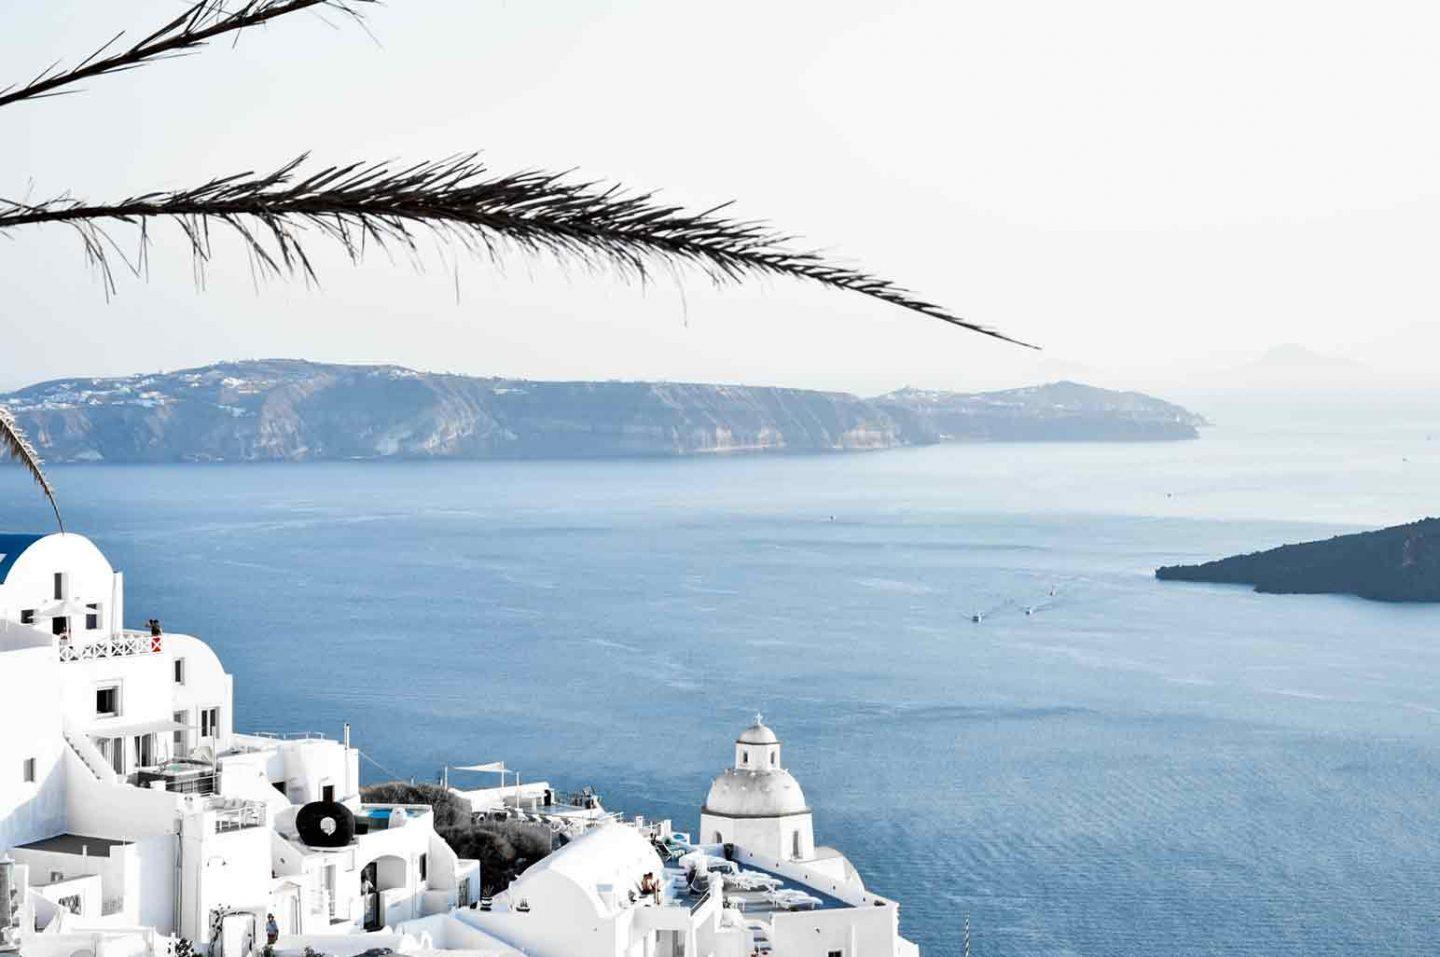 Reasons to Visit Greece